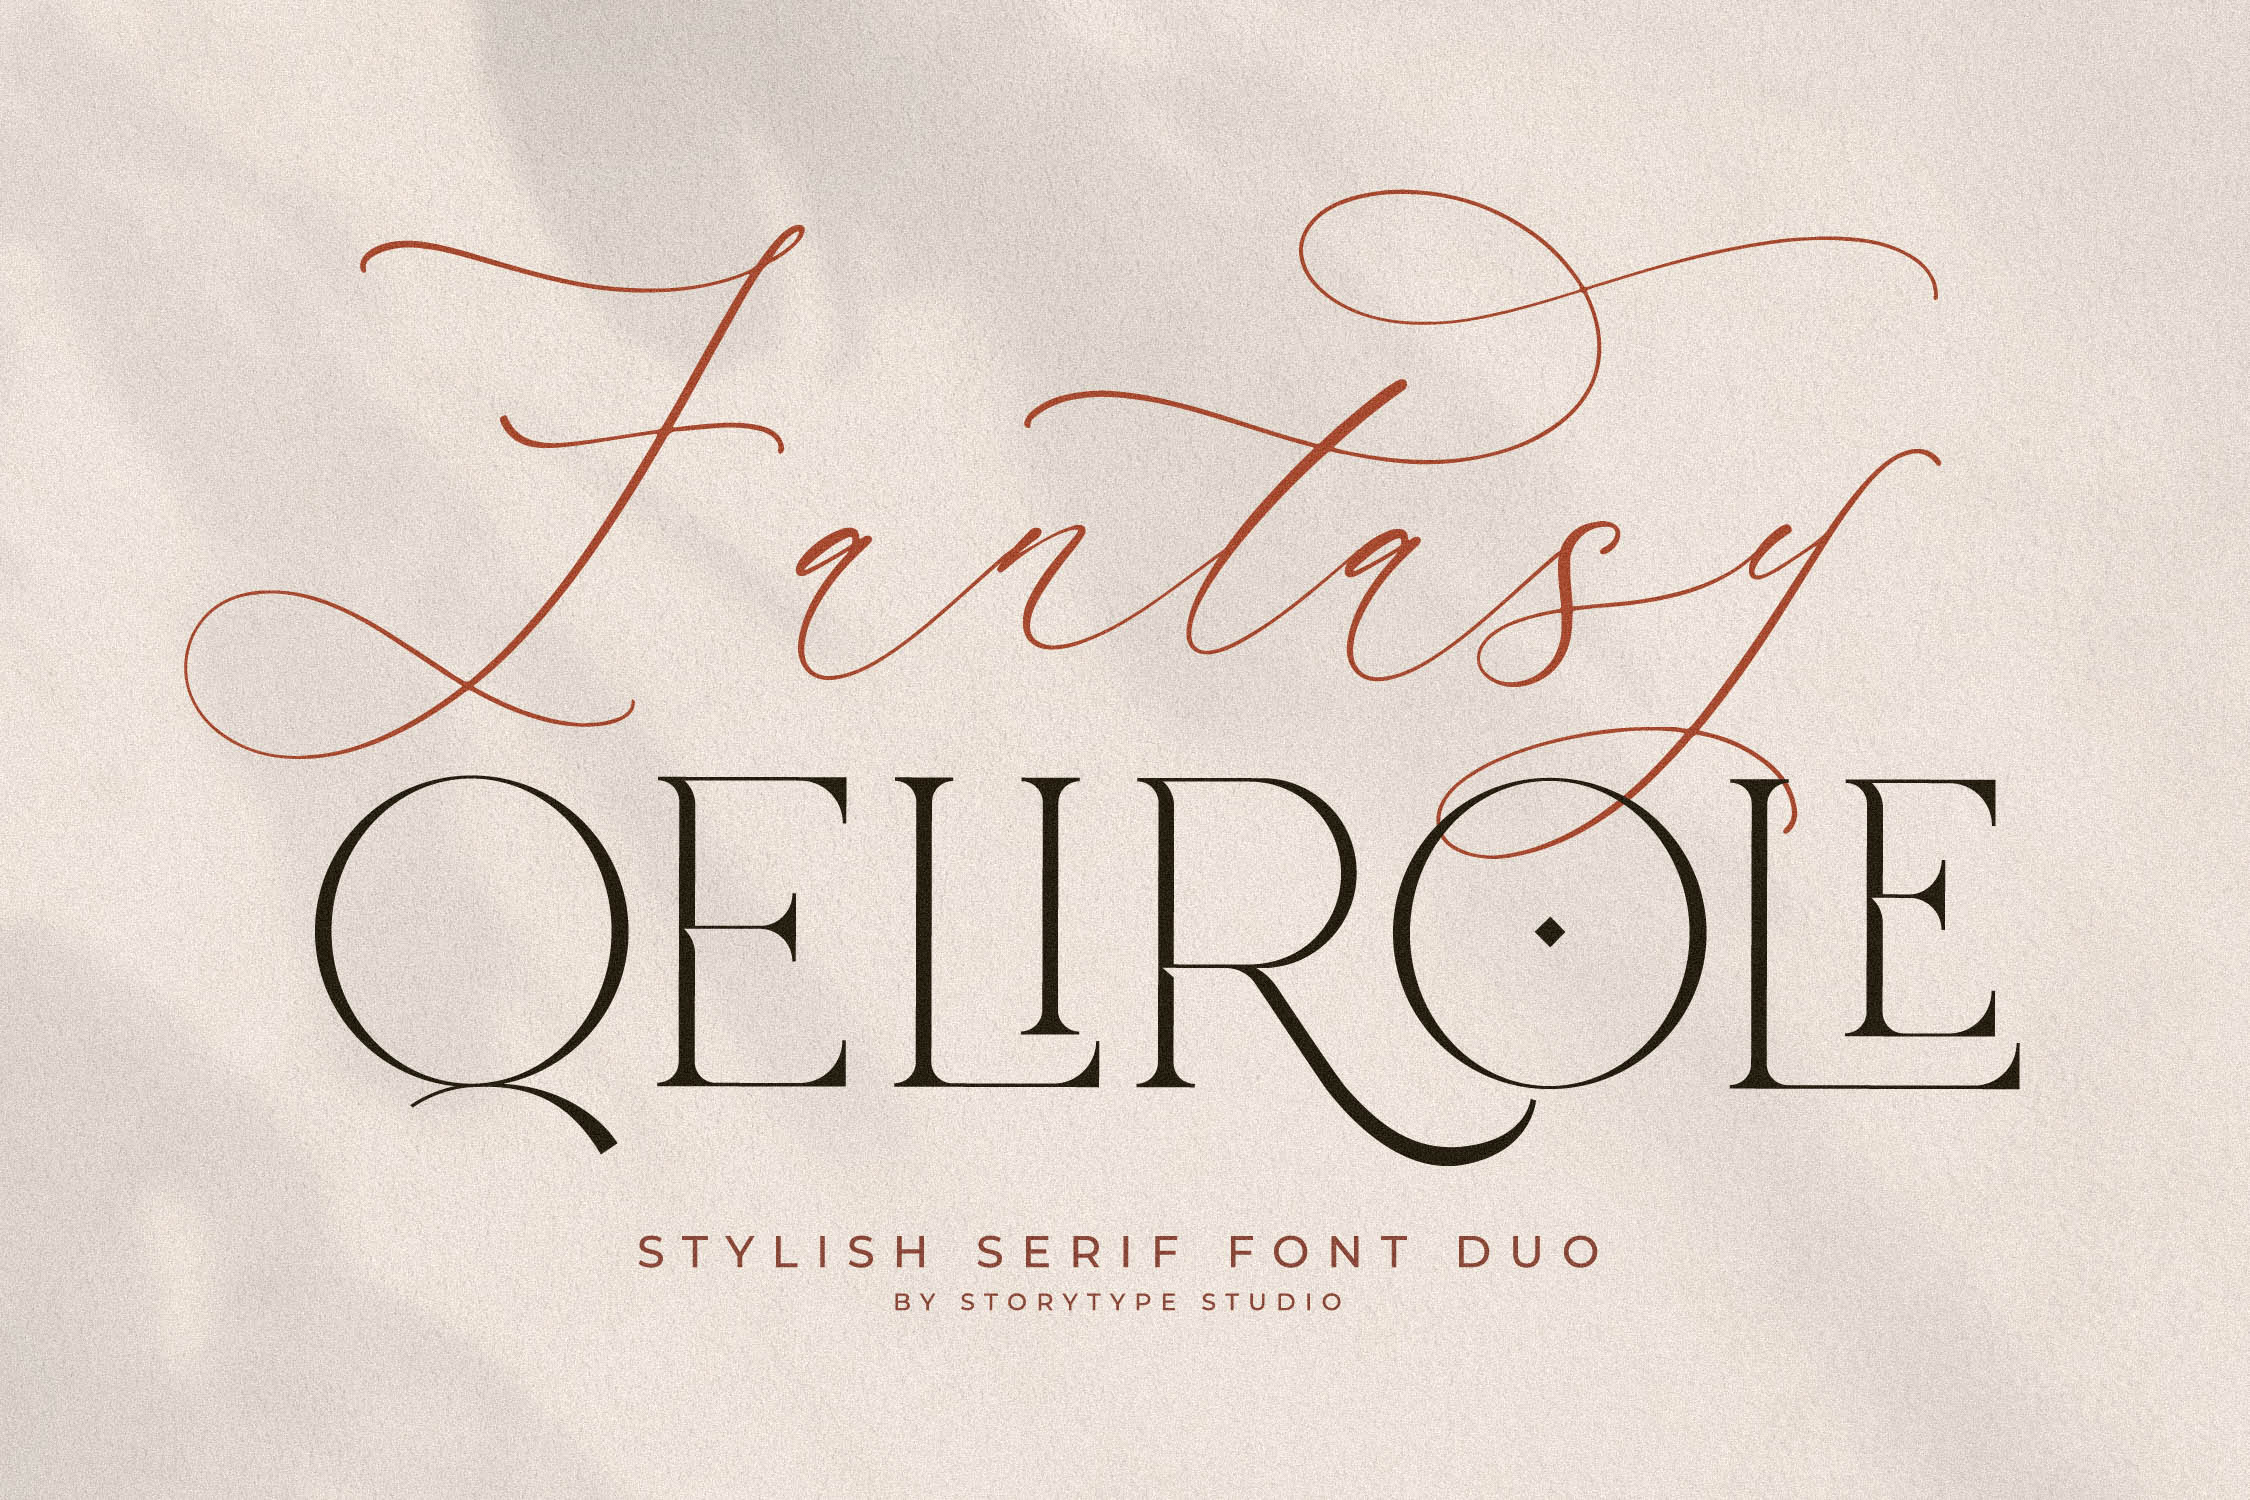 Fantasy Qelirole Script